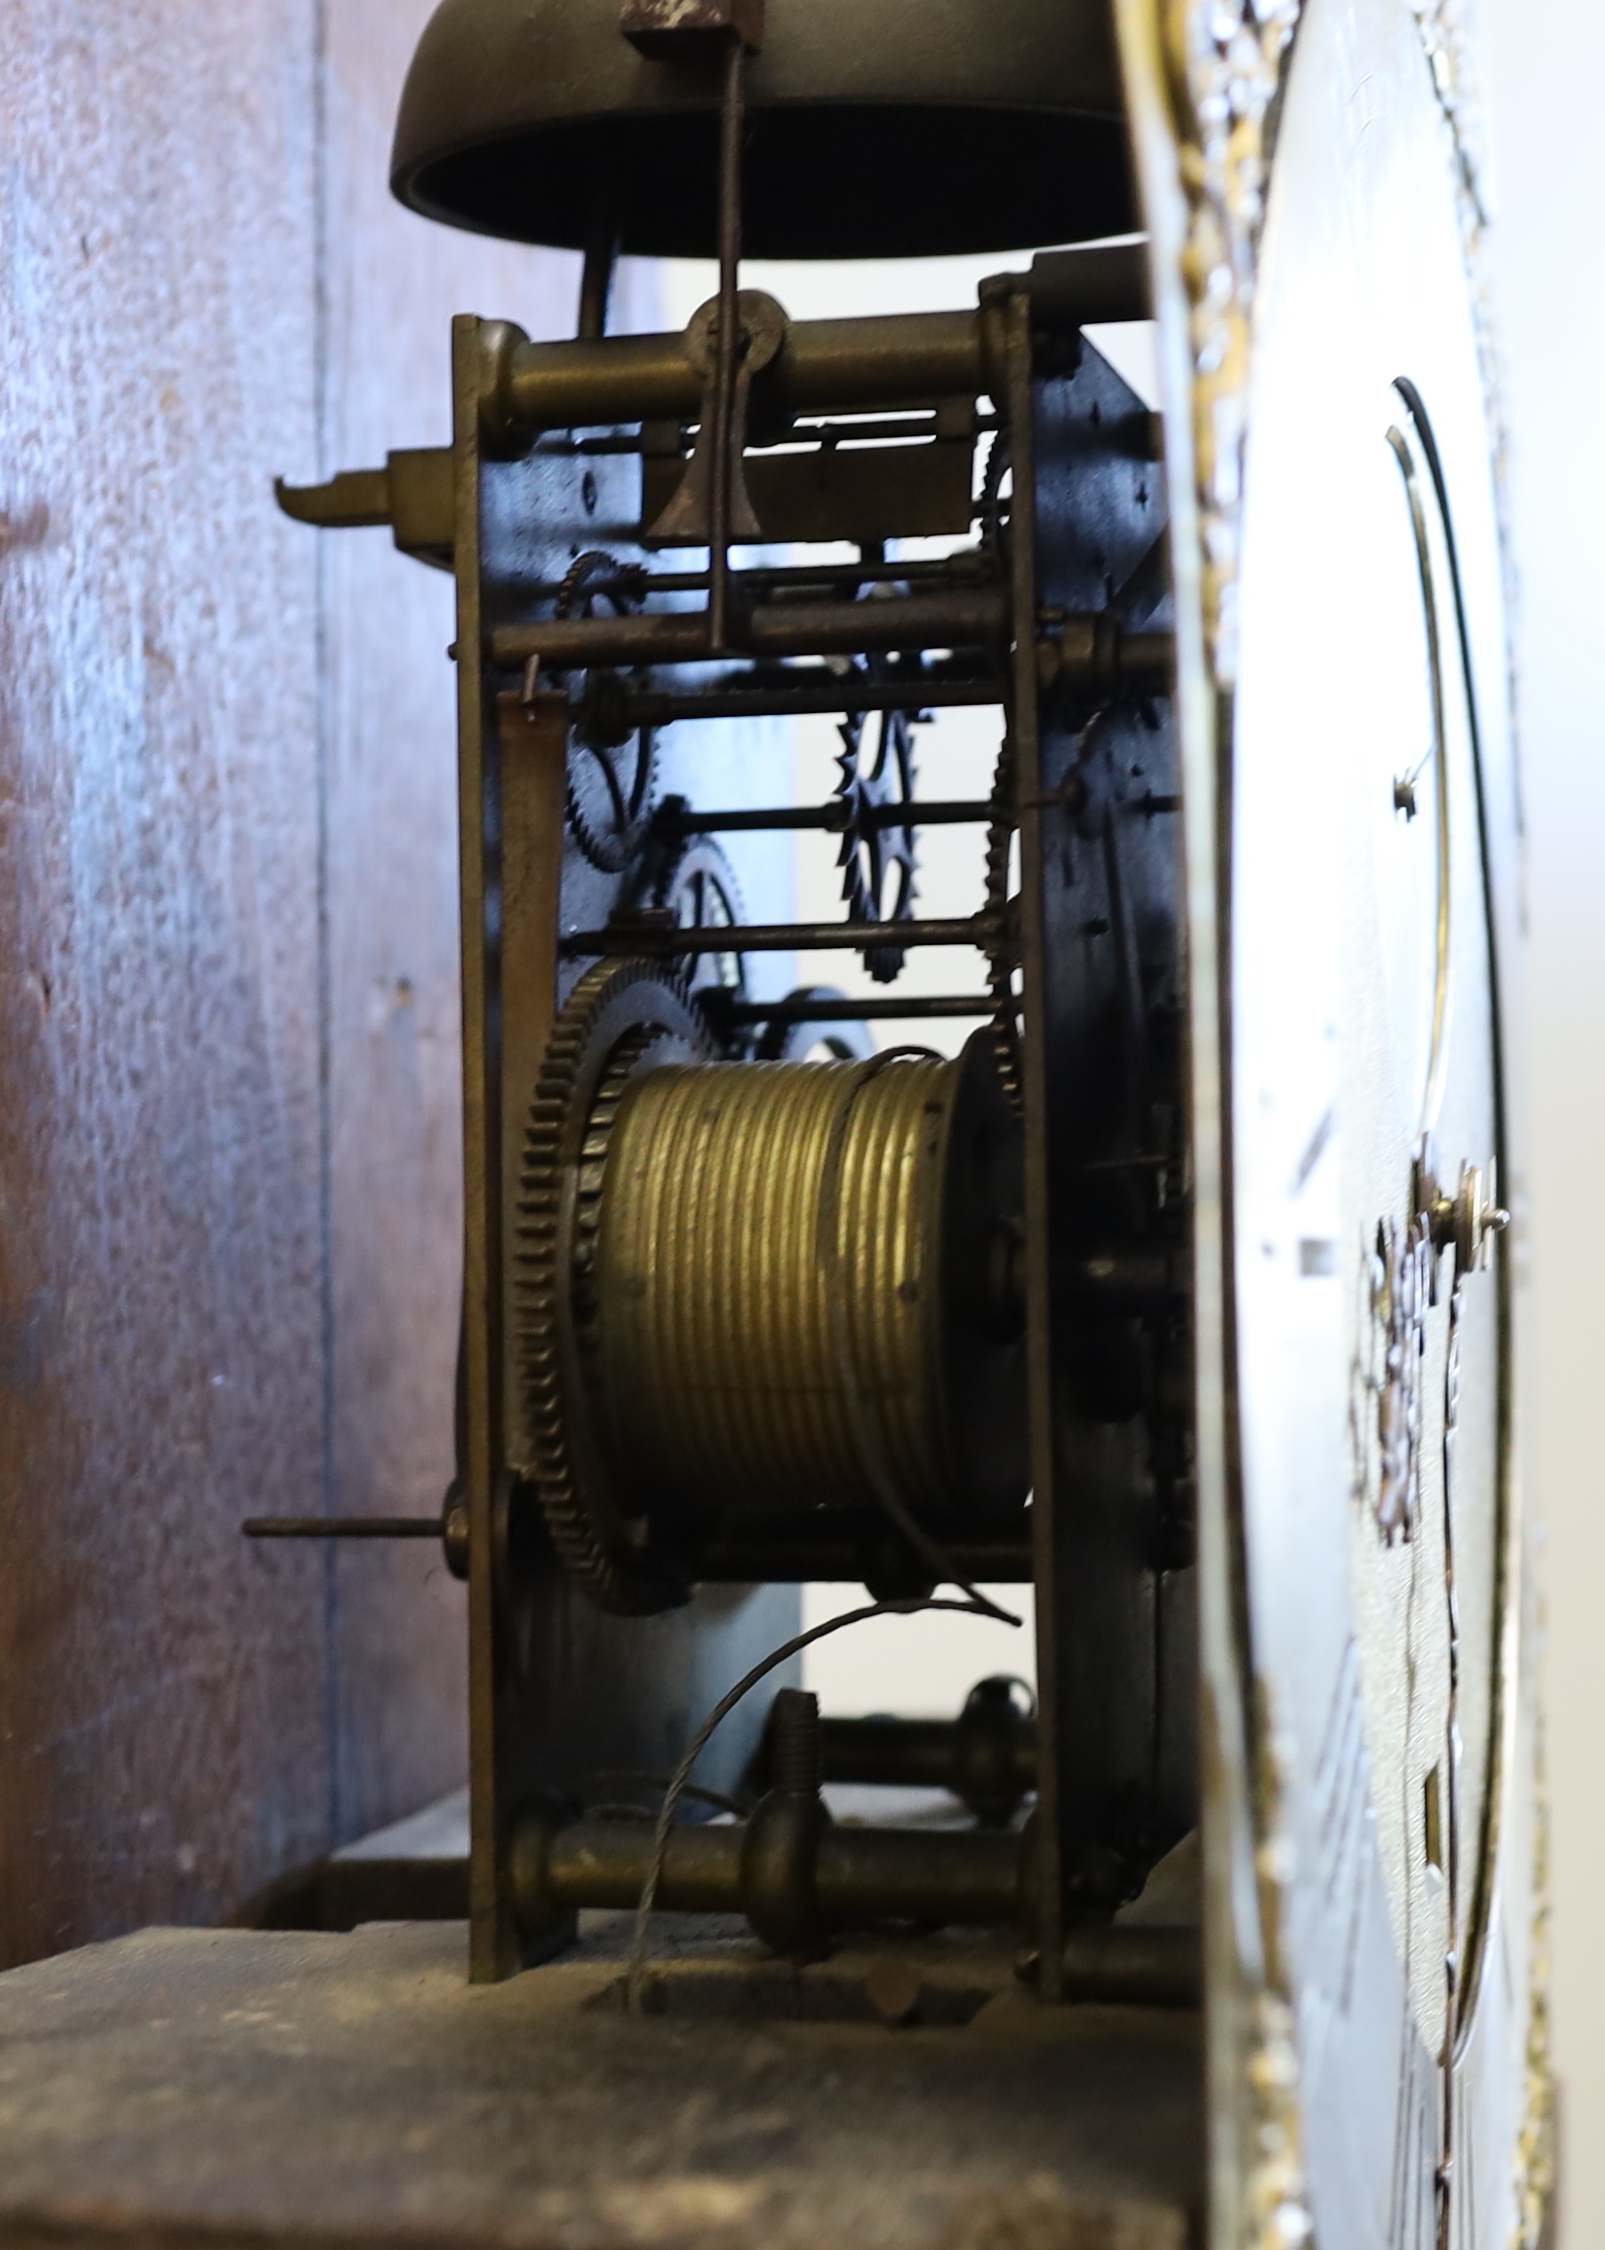 A George III mahogany longcase clock by William Grandpre, London, height 232cm